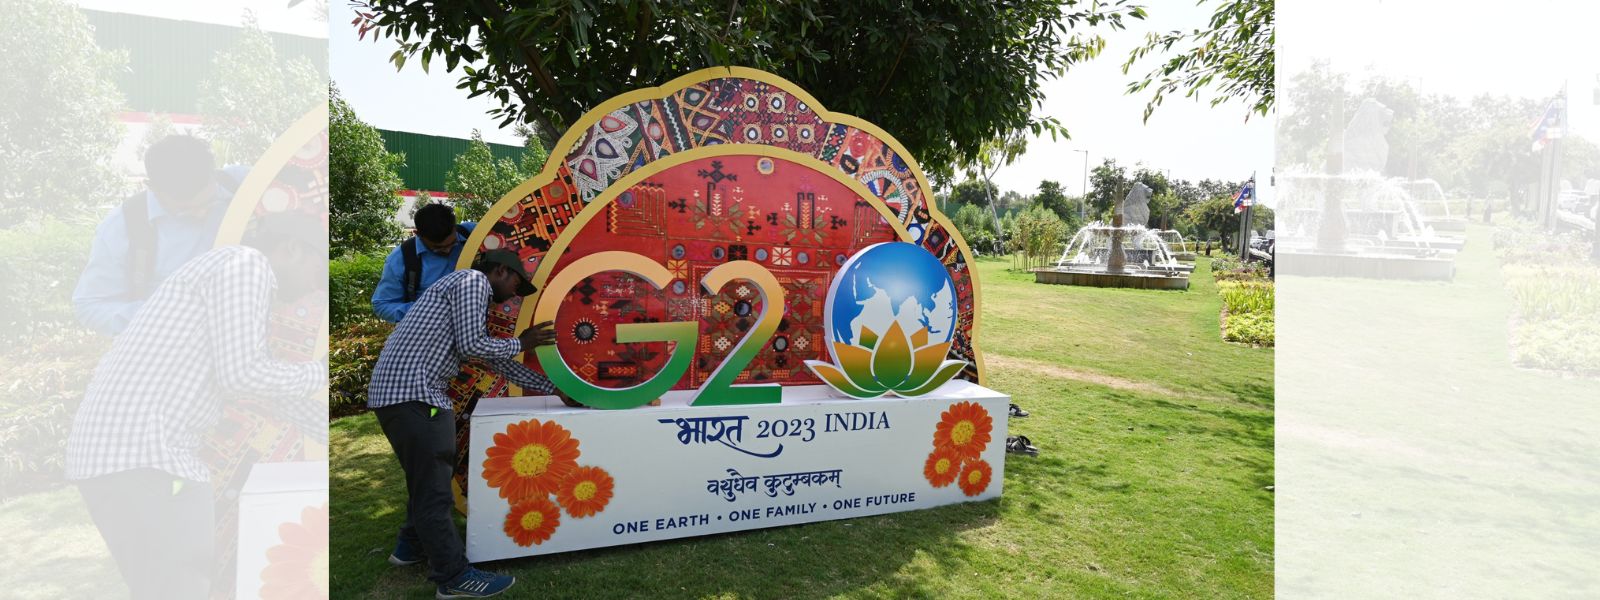 World leaders descend on New Delhi for G20 summit